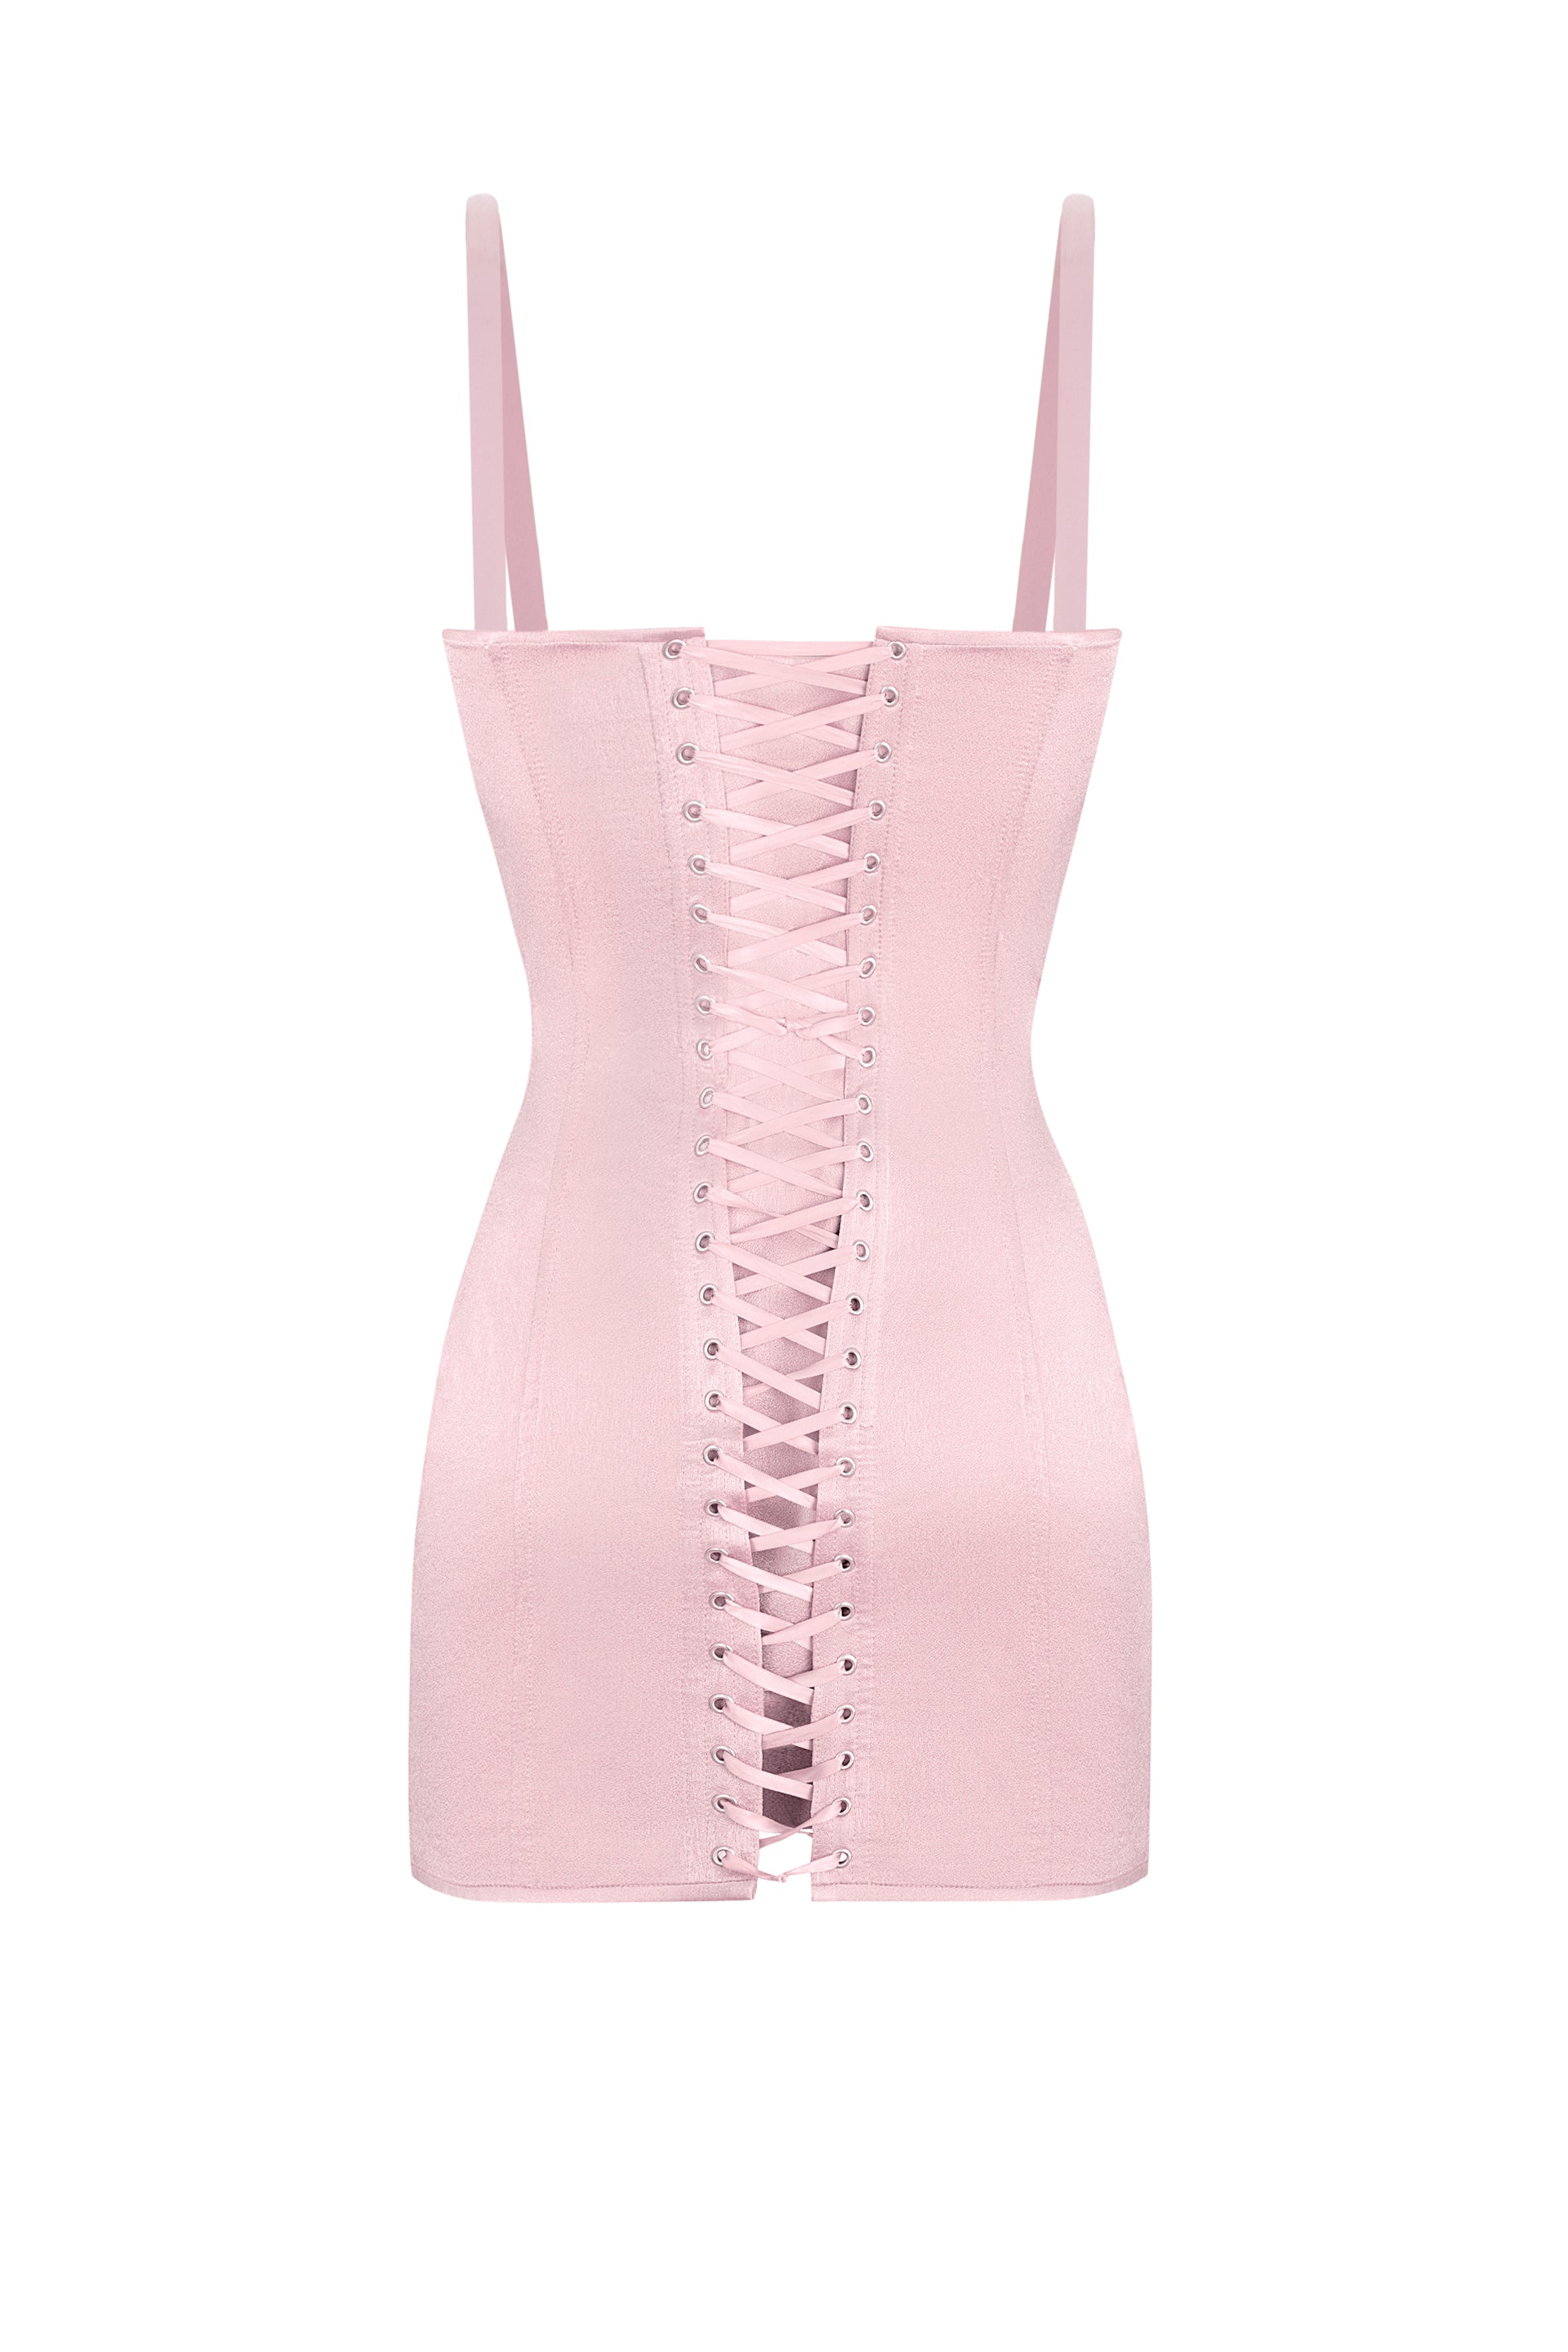 Light pink corset dress with transparent sides